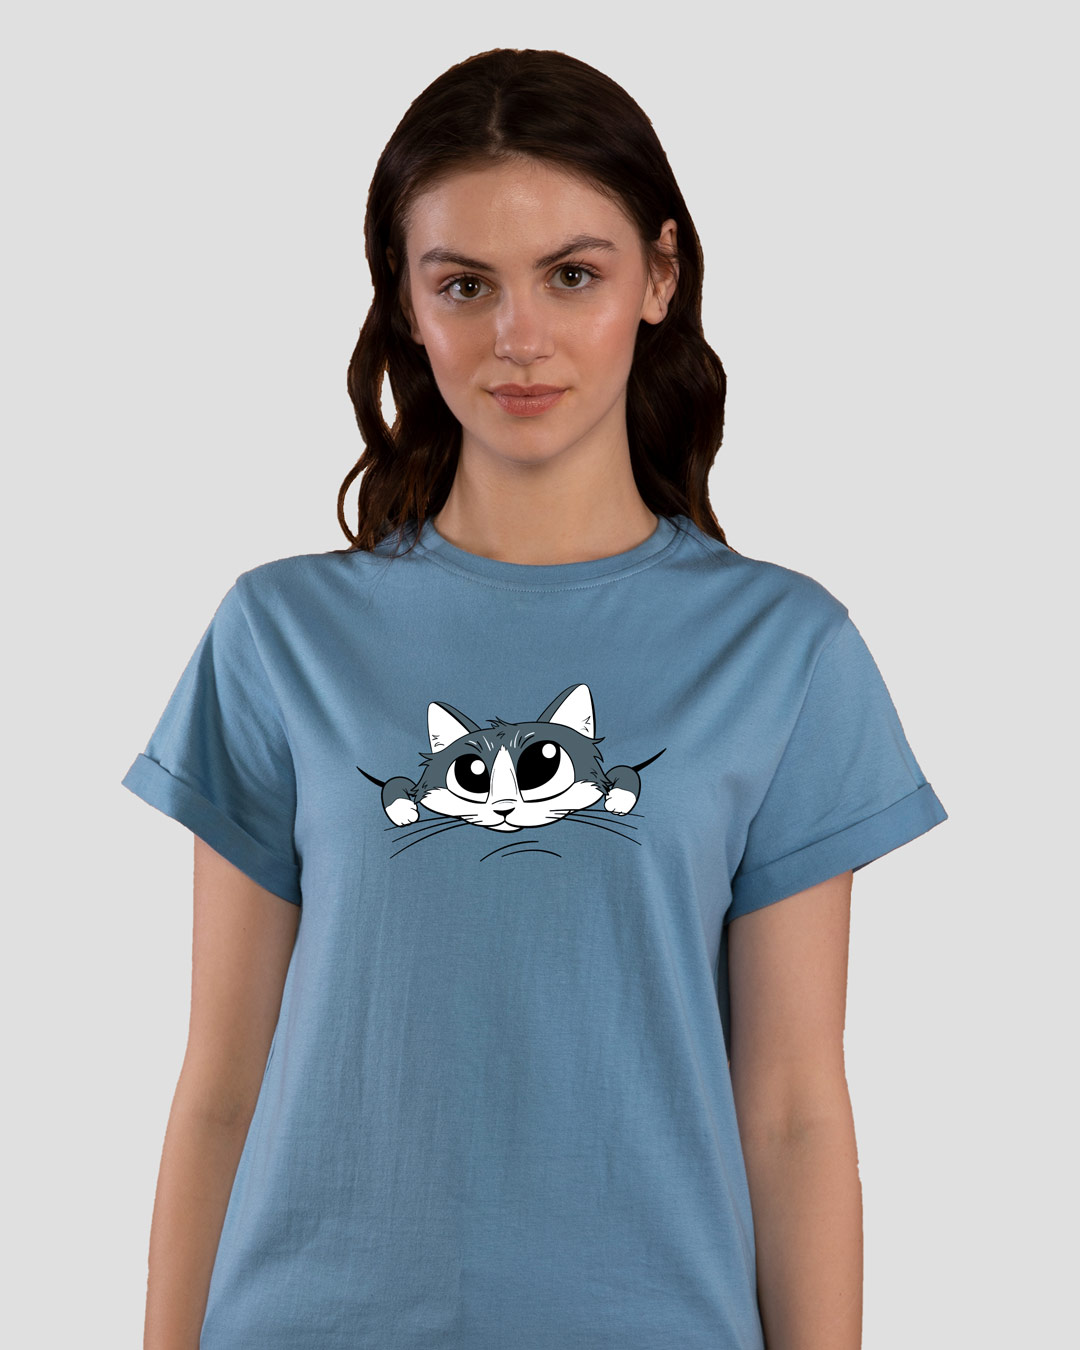 Buy Cute Peeking Cat Boyfriend T-Shirt for Women Online at Bewakoof